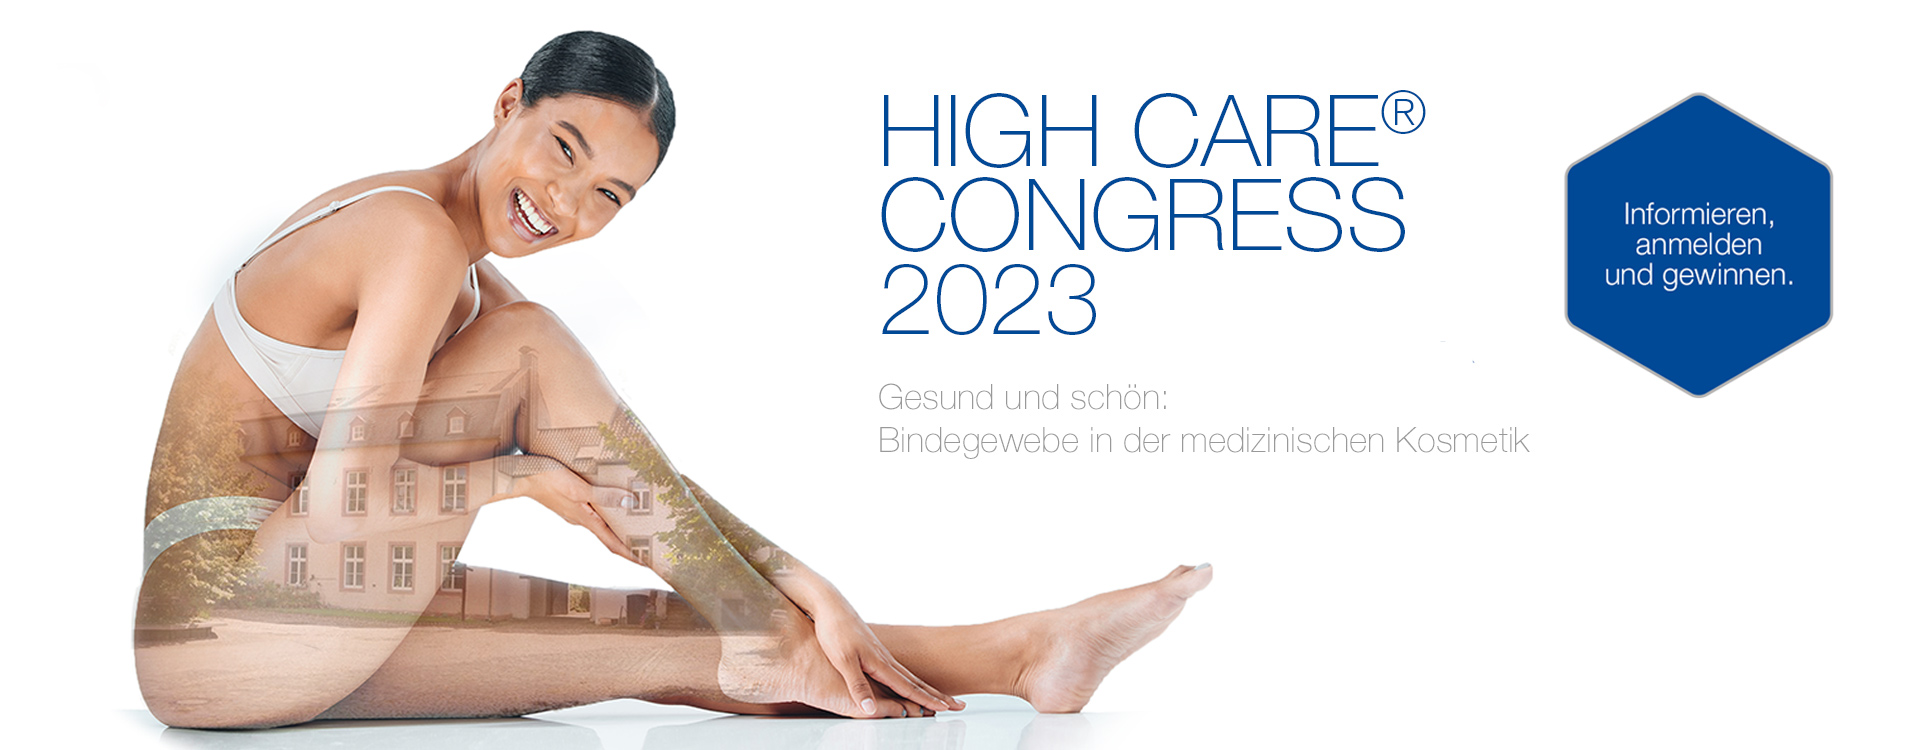 High Care Congress 2023